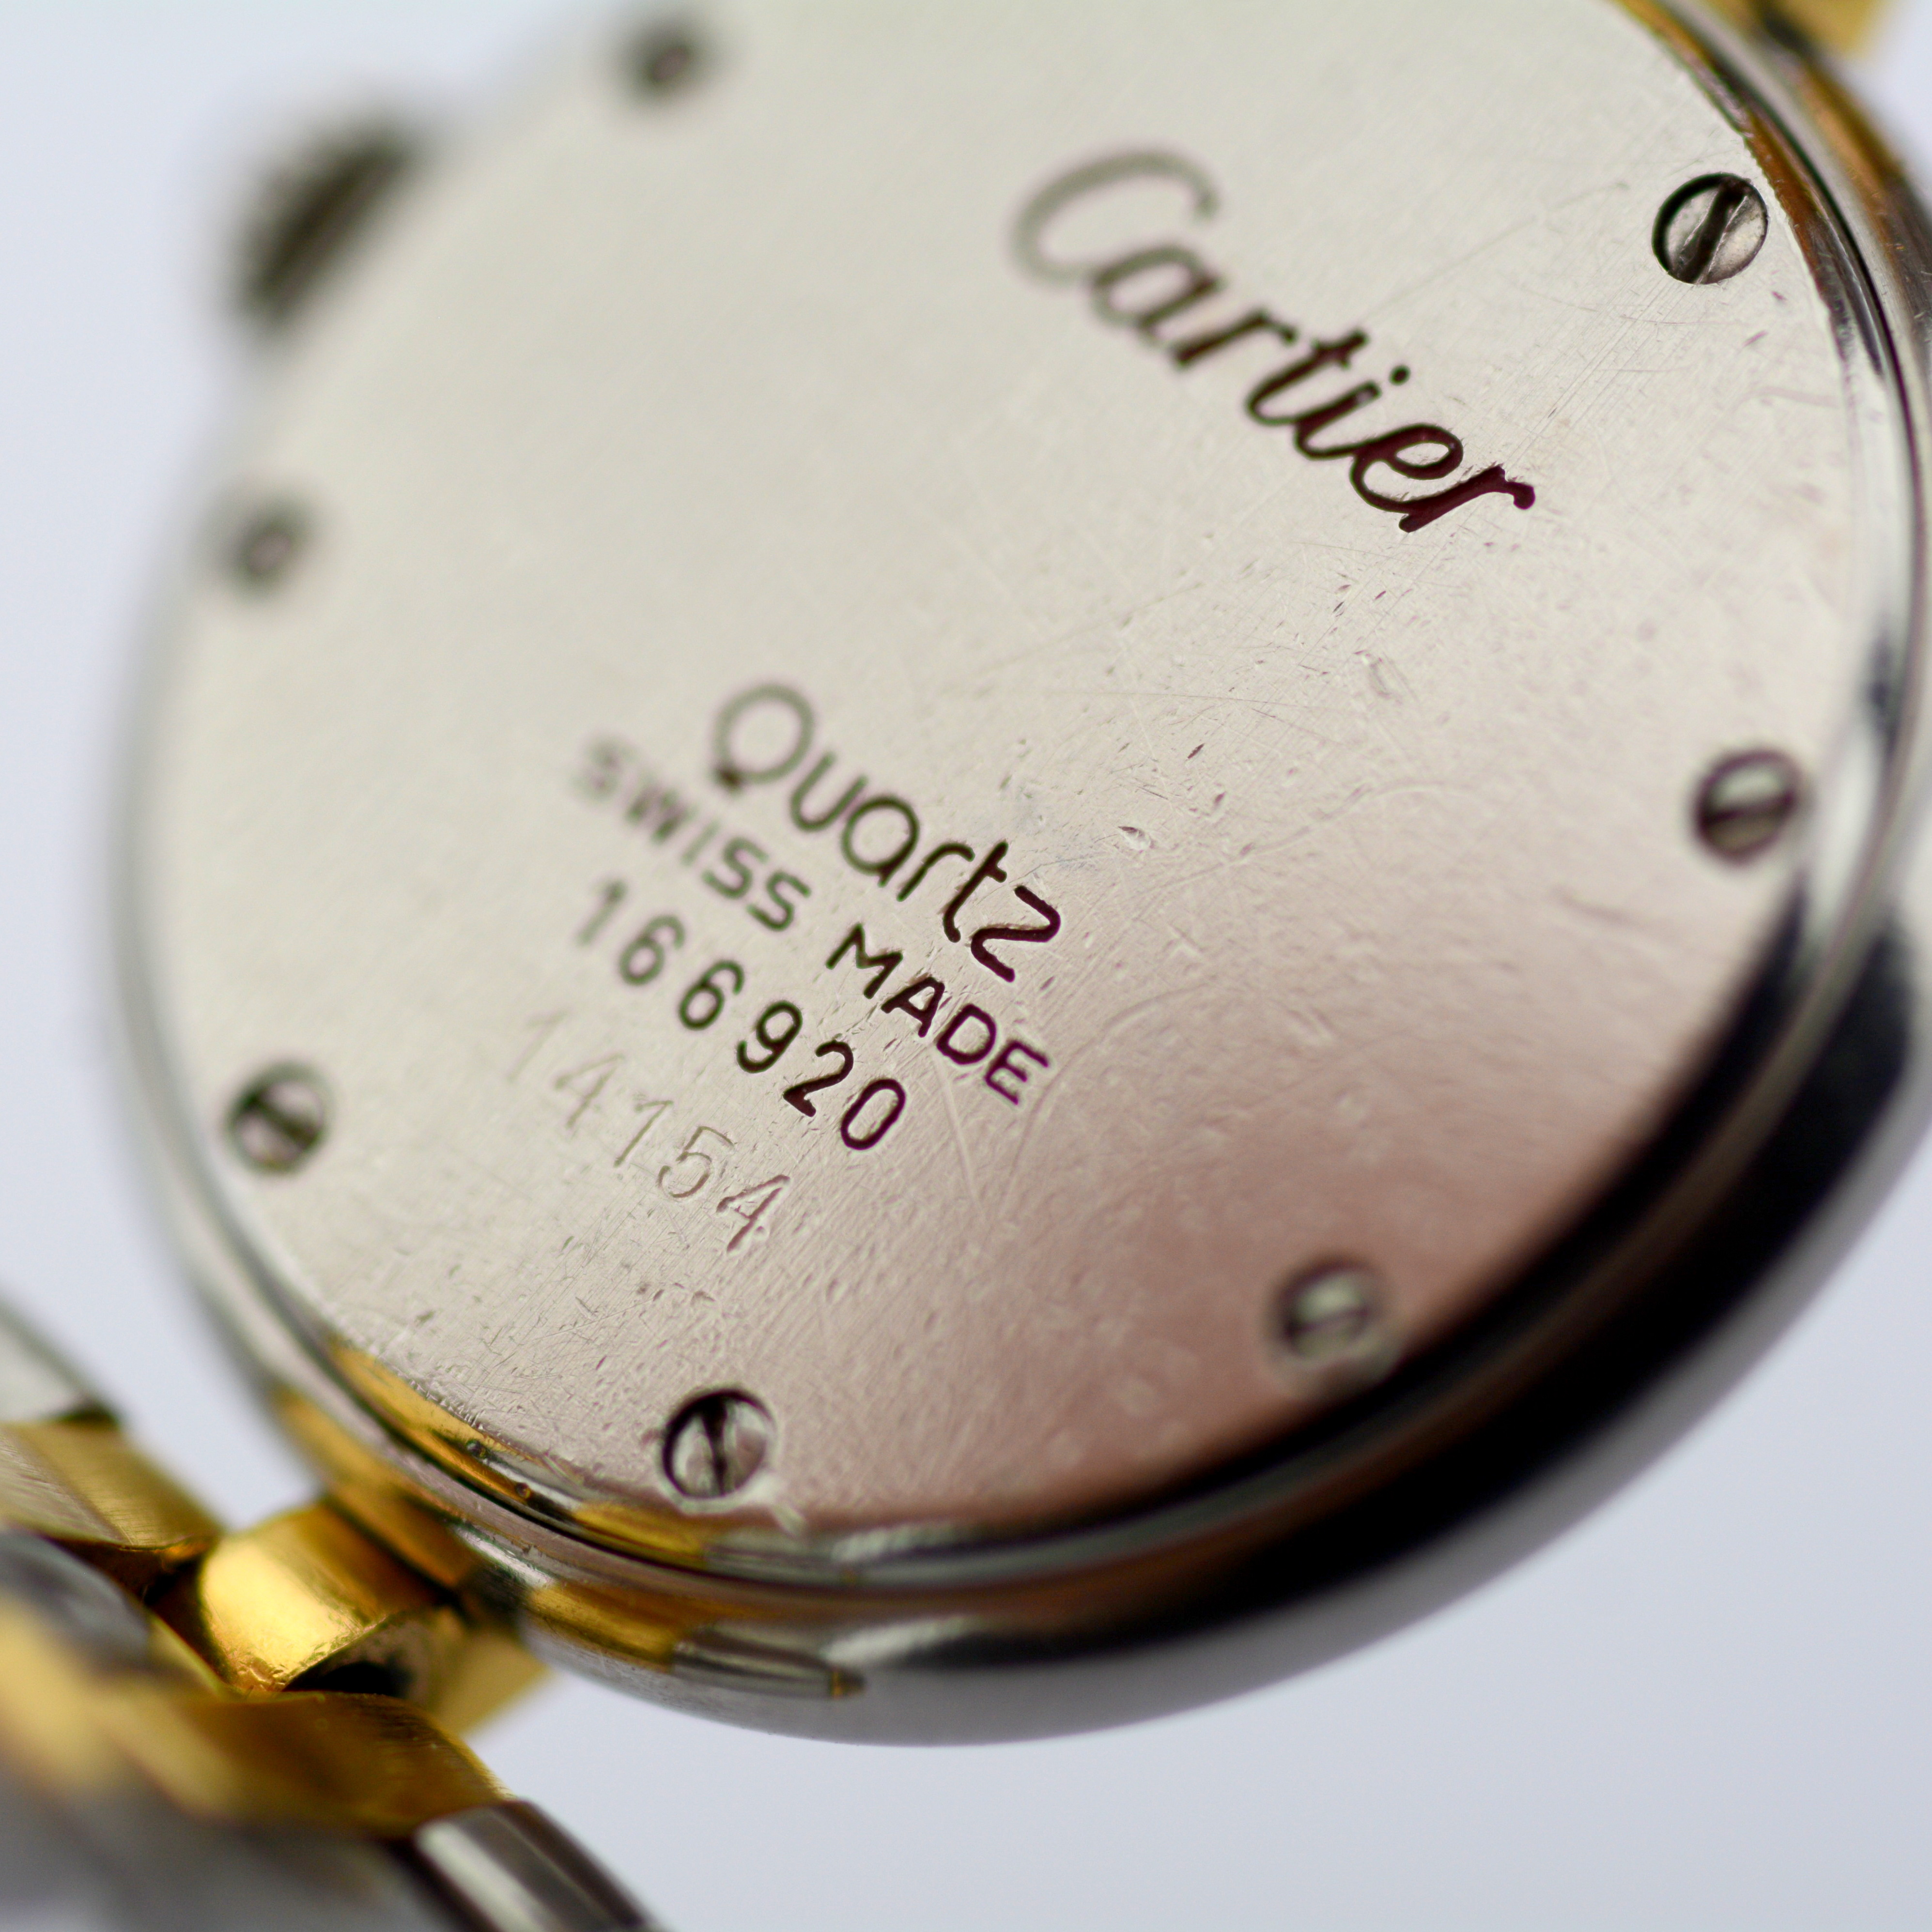 Cartier Cartier Panthere Vendome 18K double row gold bracelet - Image 7 of 9